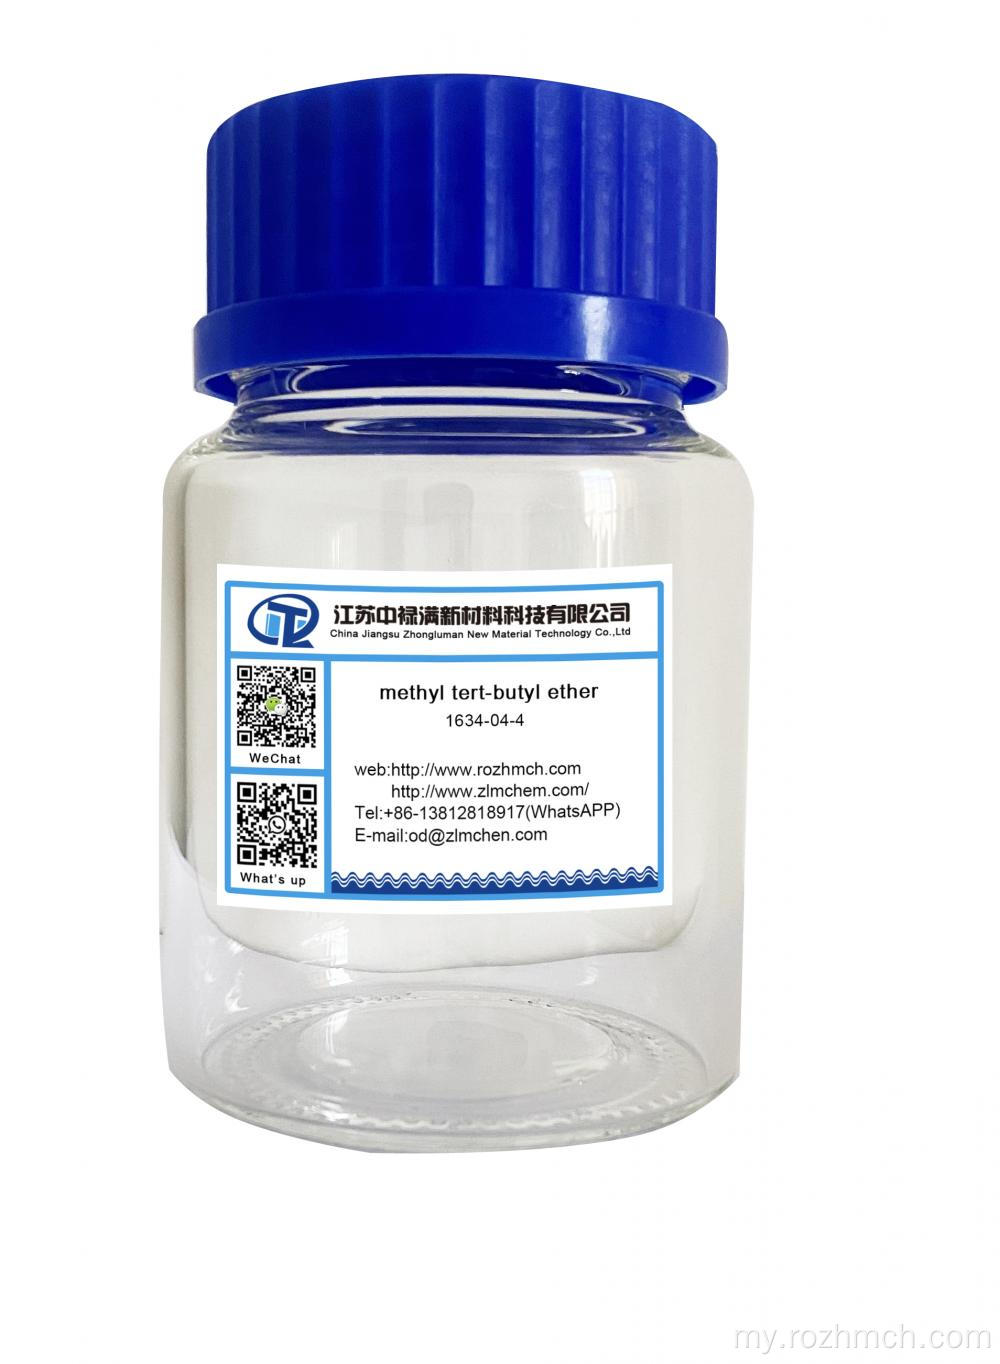 Methyl Tert-Butyl Ether Mtbe CAs No 1634-04-4